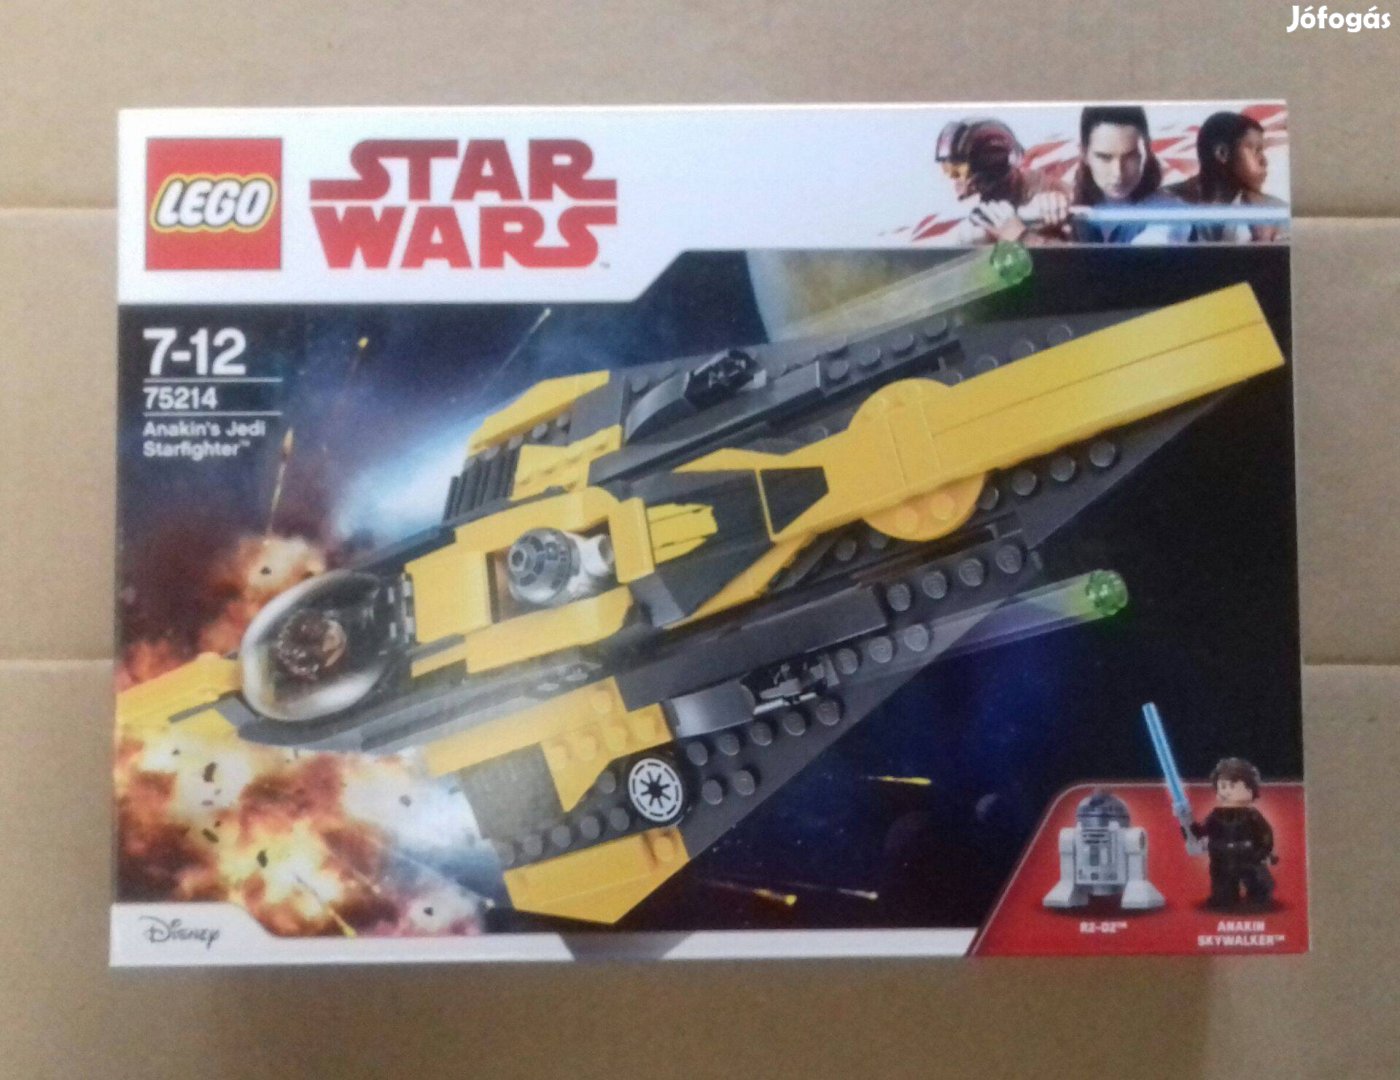 Foglalva : a Bontatlan Star Wars LEGO 75214 Anakain csillagvadásza.